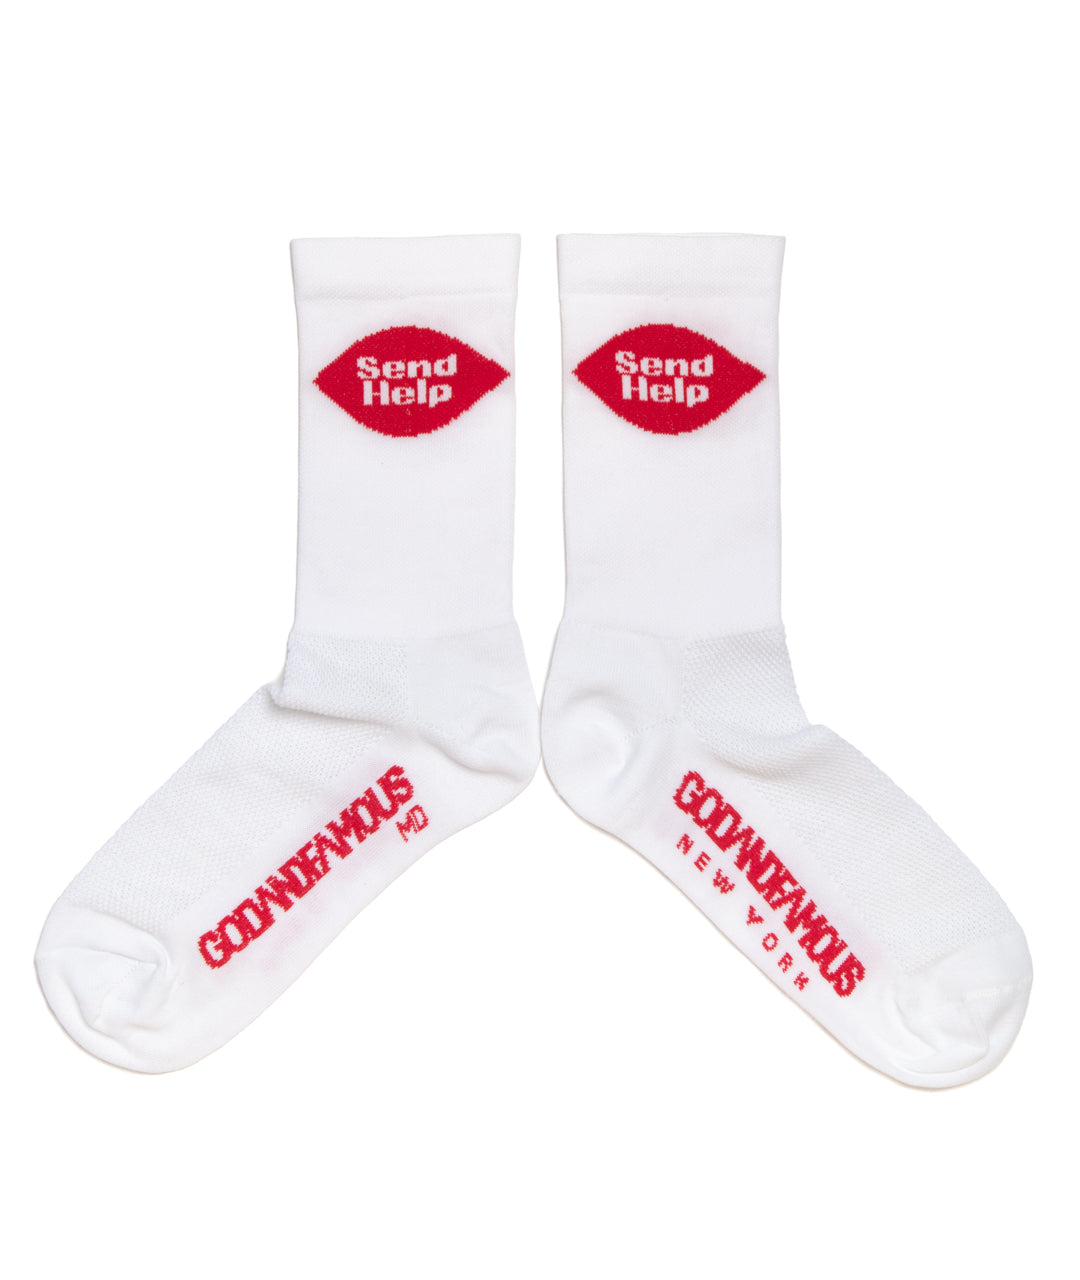 God & Famous Send Help Socks